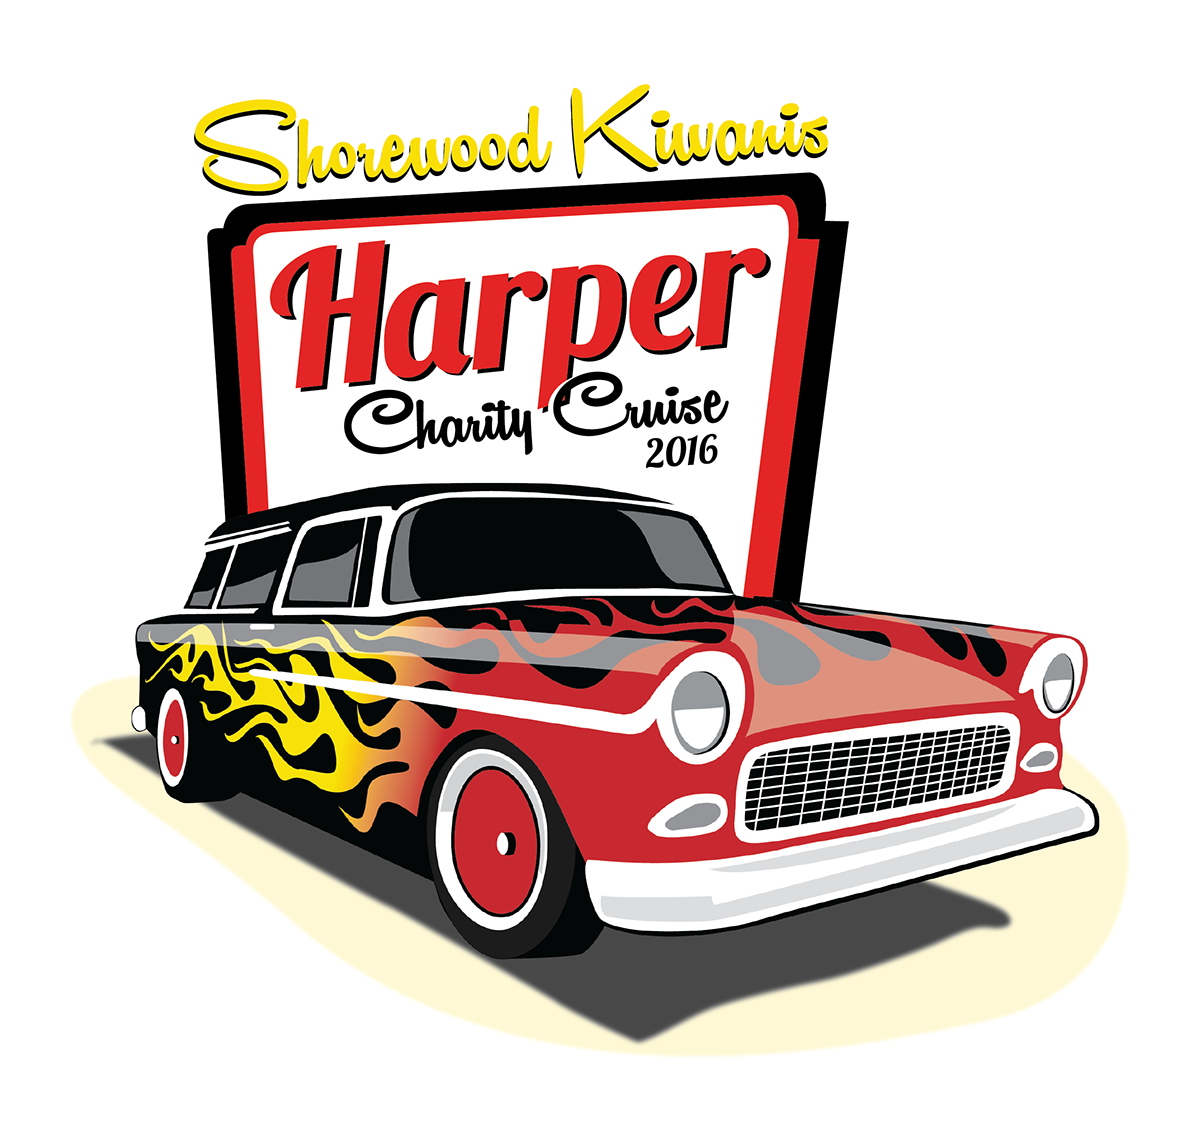 harper charity cruise Logo Design